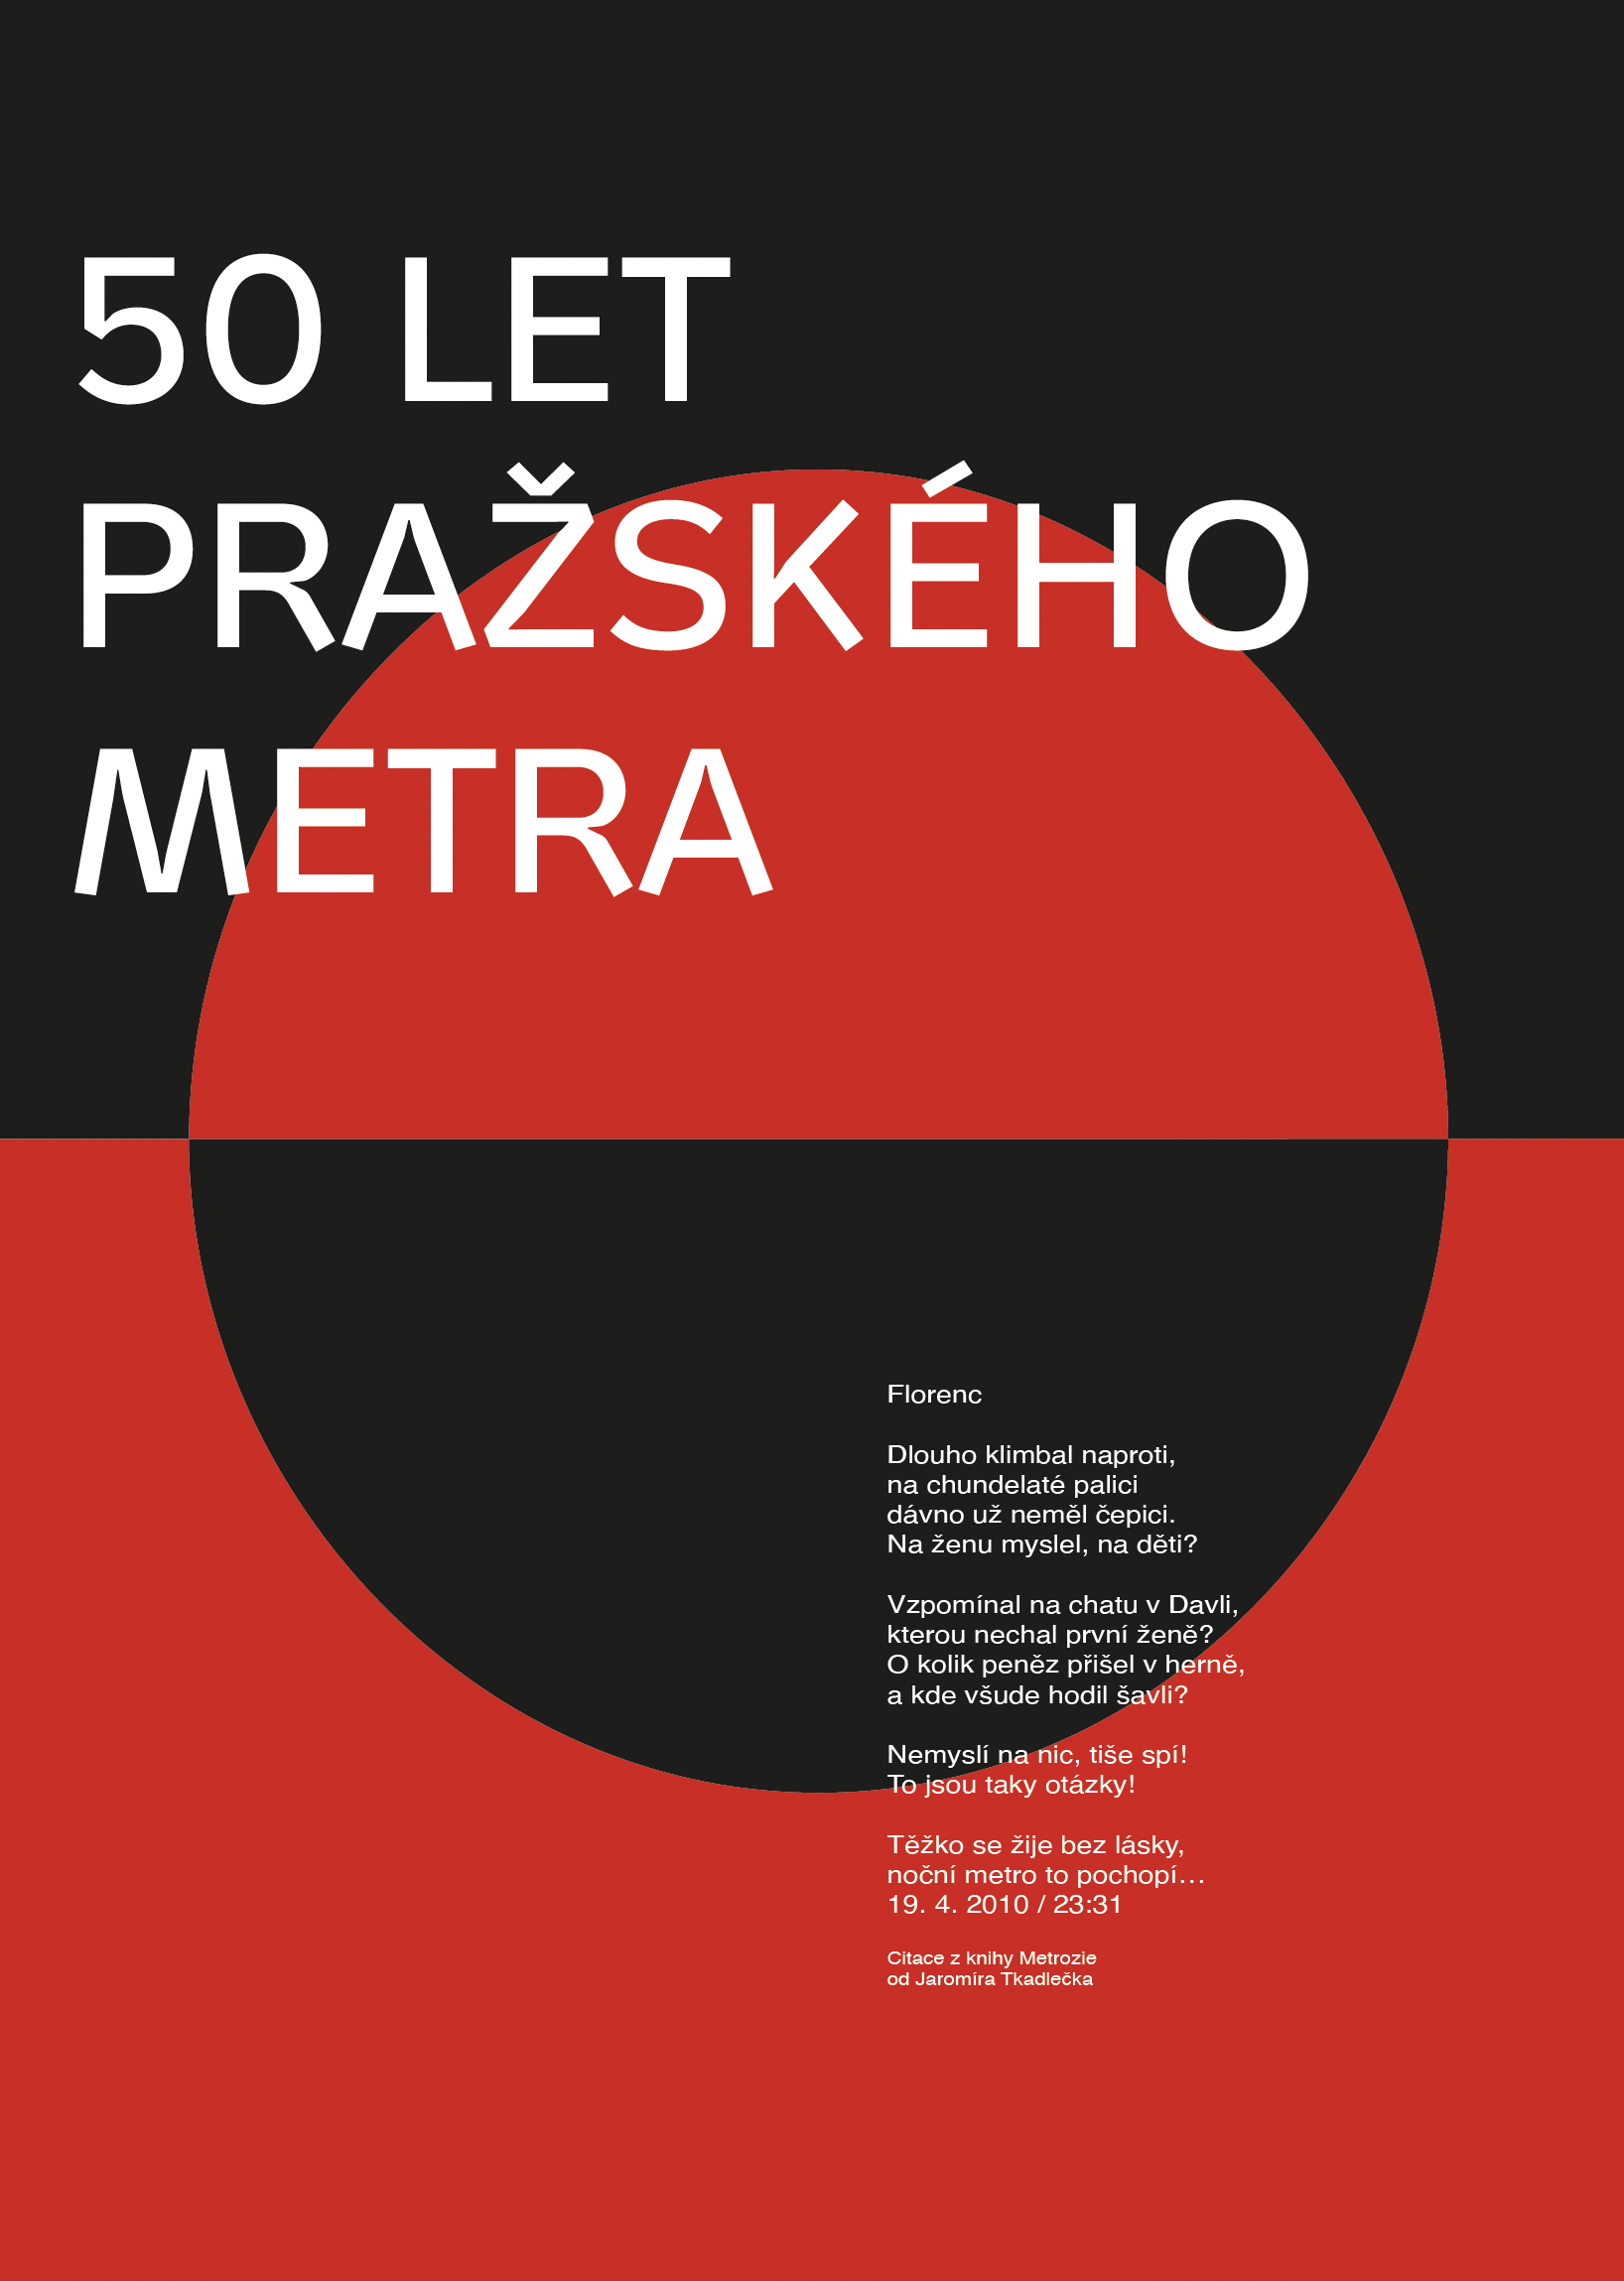 50 let pražského metra<br> 4. ročník 2021/2022